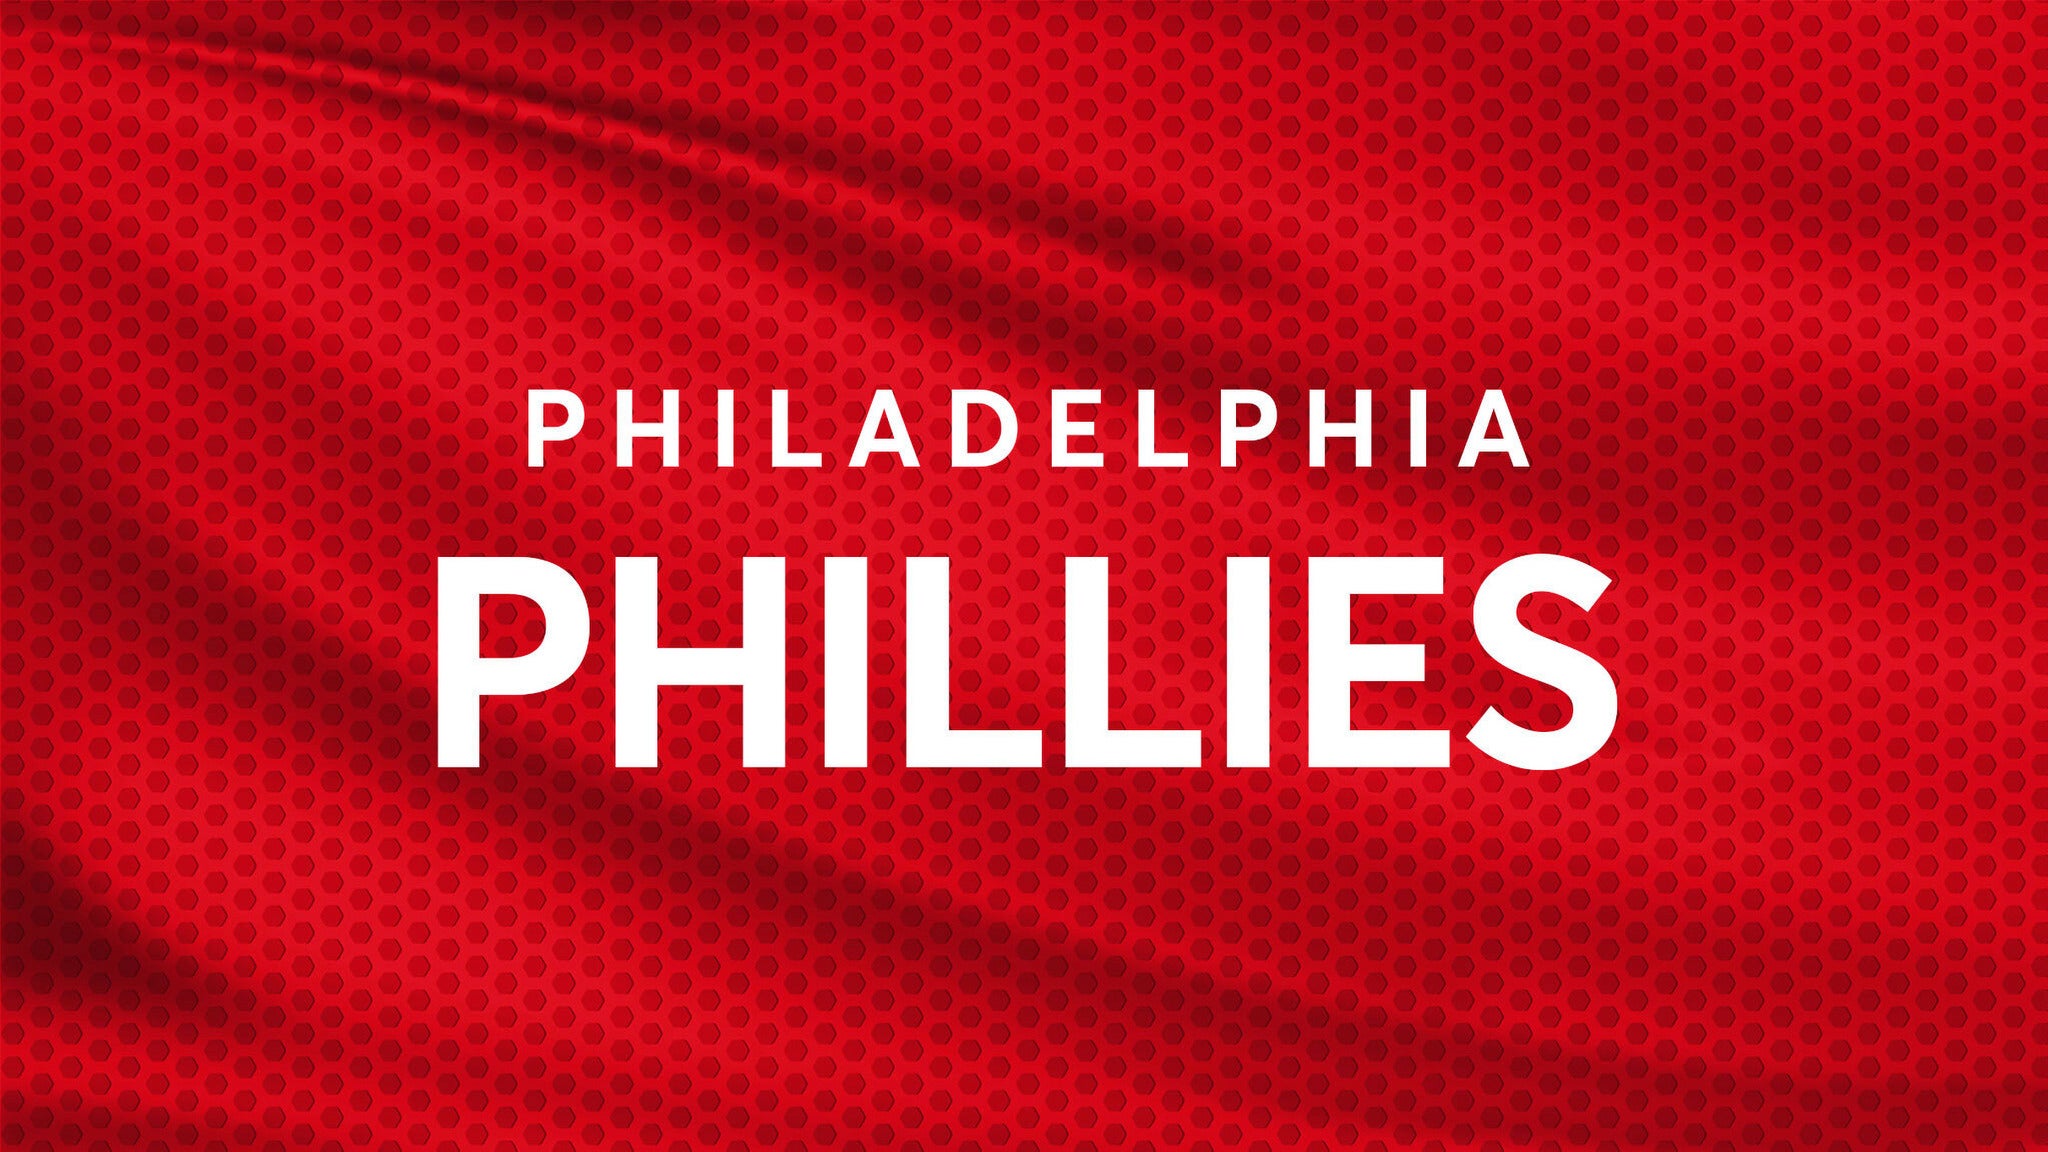 Philadelphia Phillies Vs. Atlanta Braves 2022 09 23 19:05:00 In One Citizens Bank Way Philadelphia, PA Philadelphia 19148 Cheap Tickets On LIVES TICKET